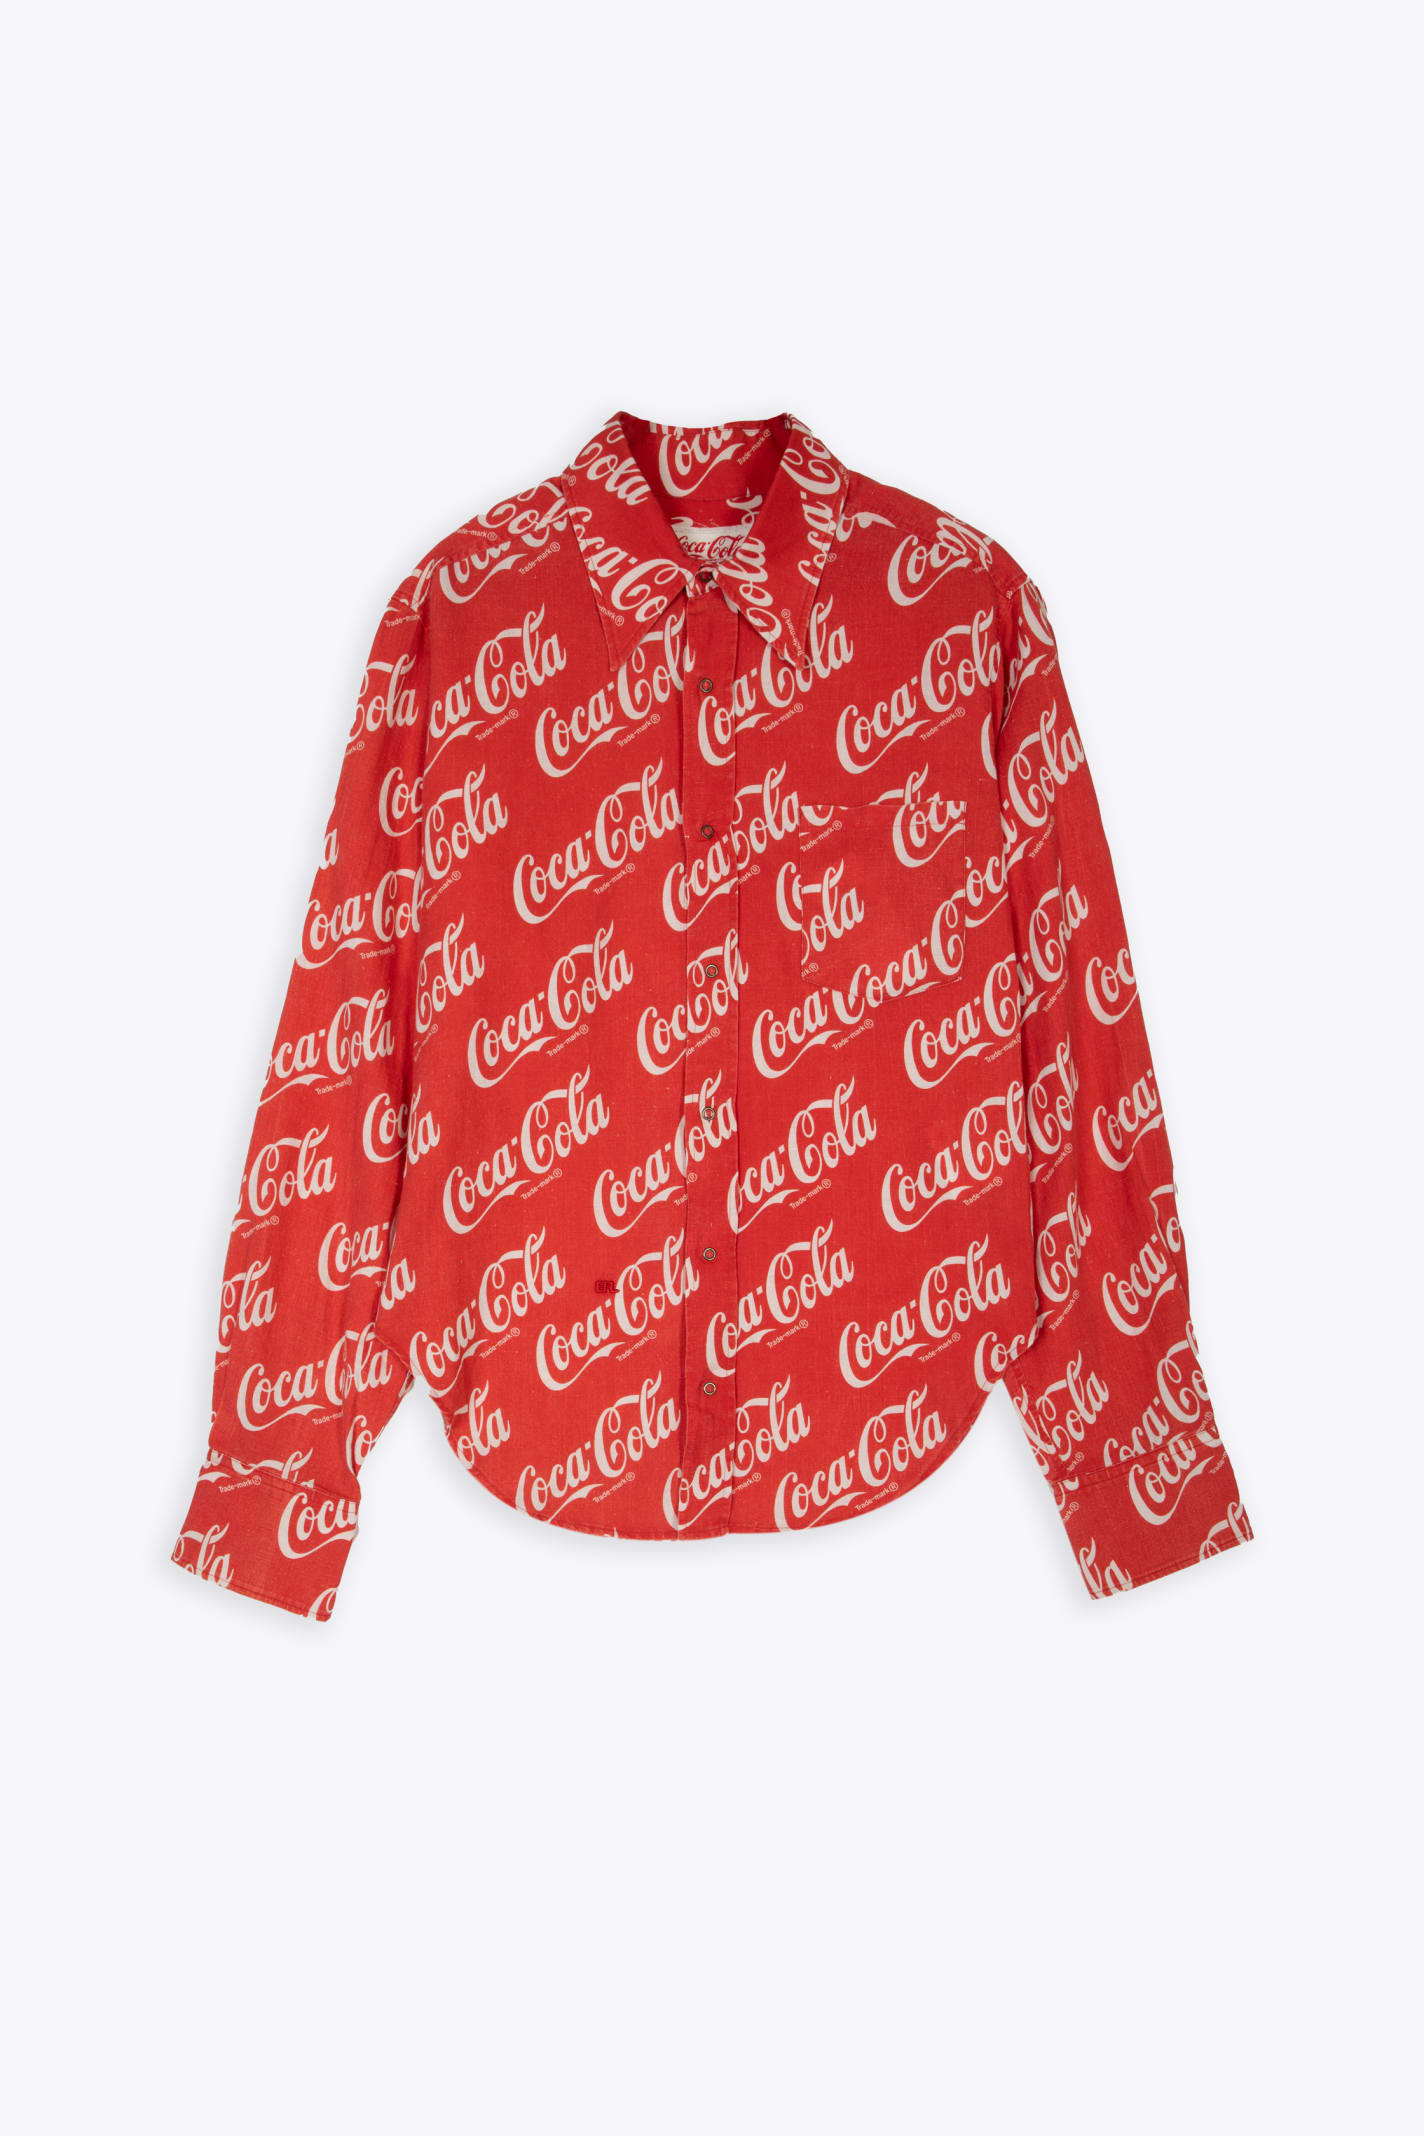 Unisex Printed Button Up Shirt Woven Red linen blend Coca Cola shirt - Unisex Printed Button Up Shirt Woven